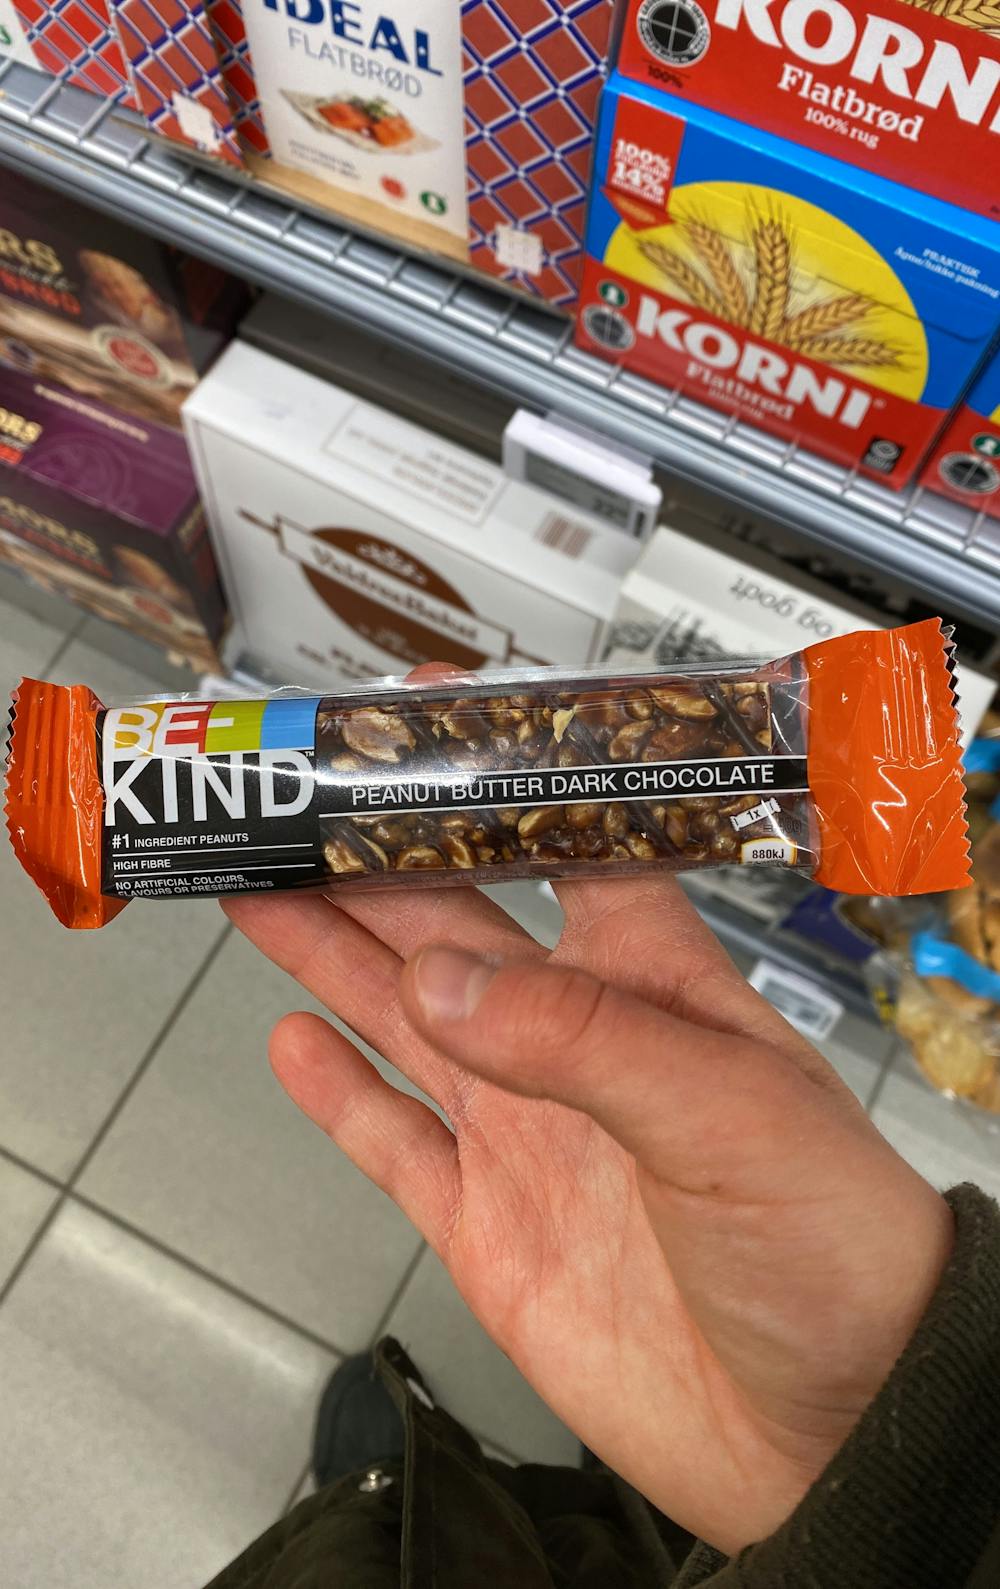 Peanut butter dark chocolate, Be-kind